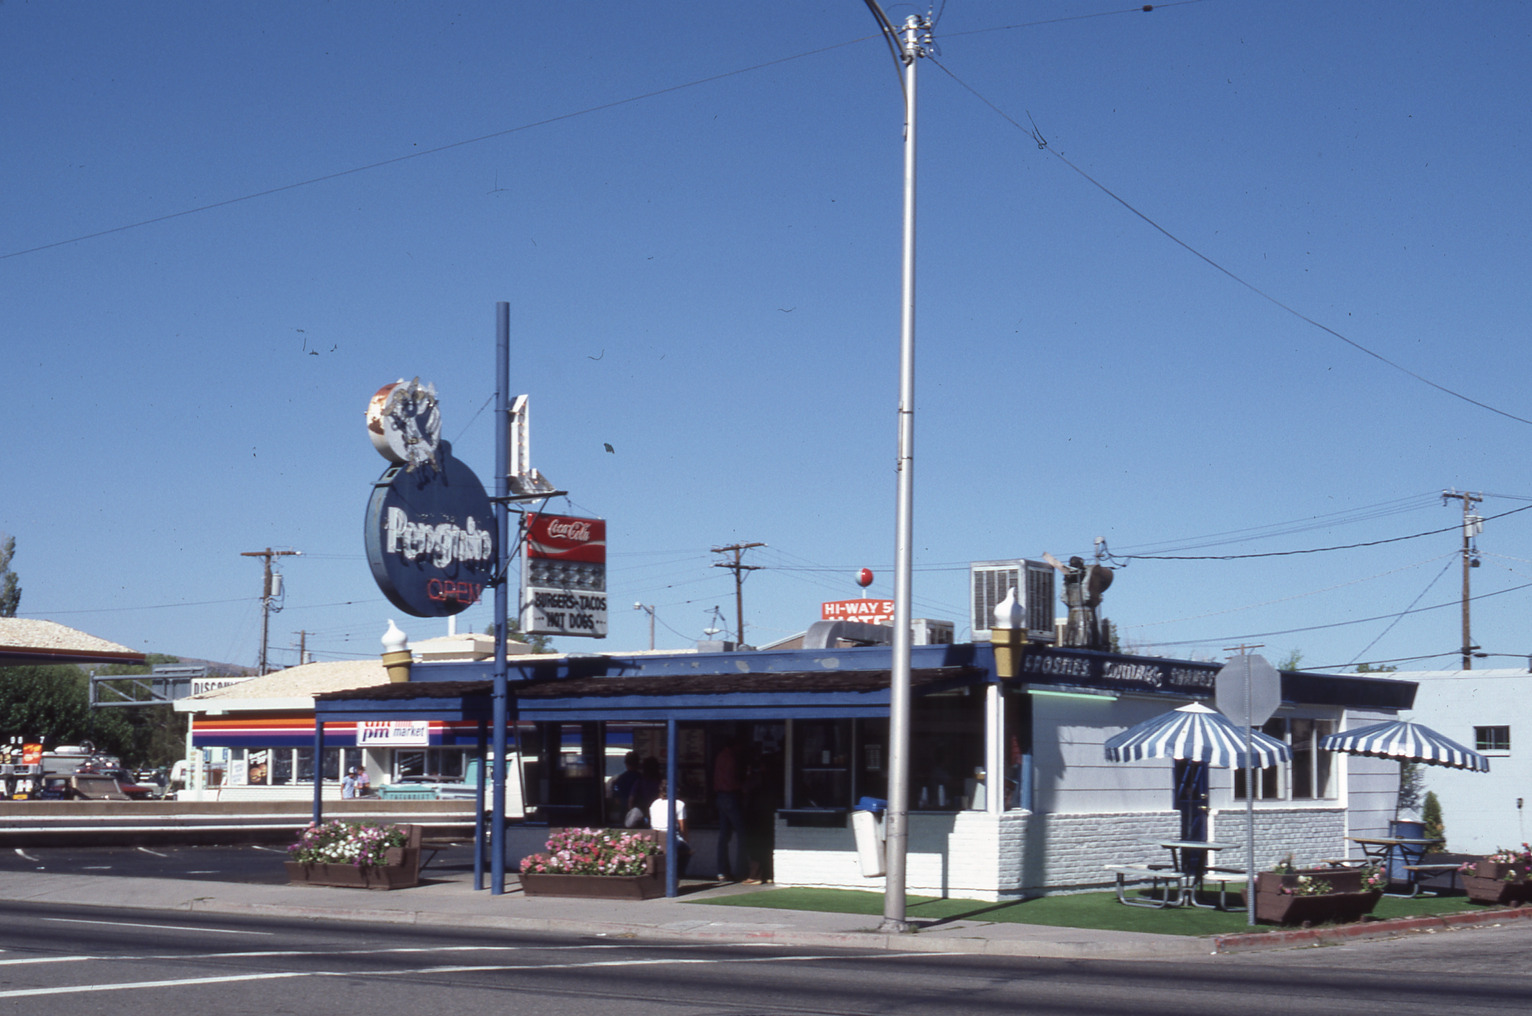 Penguin Restaurant flag mounted pylon sign, Carson City, Nevada: photographic print